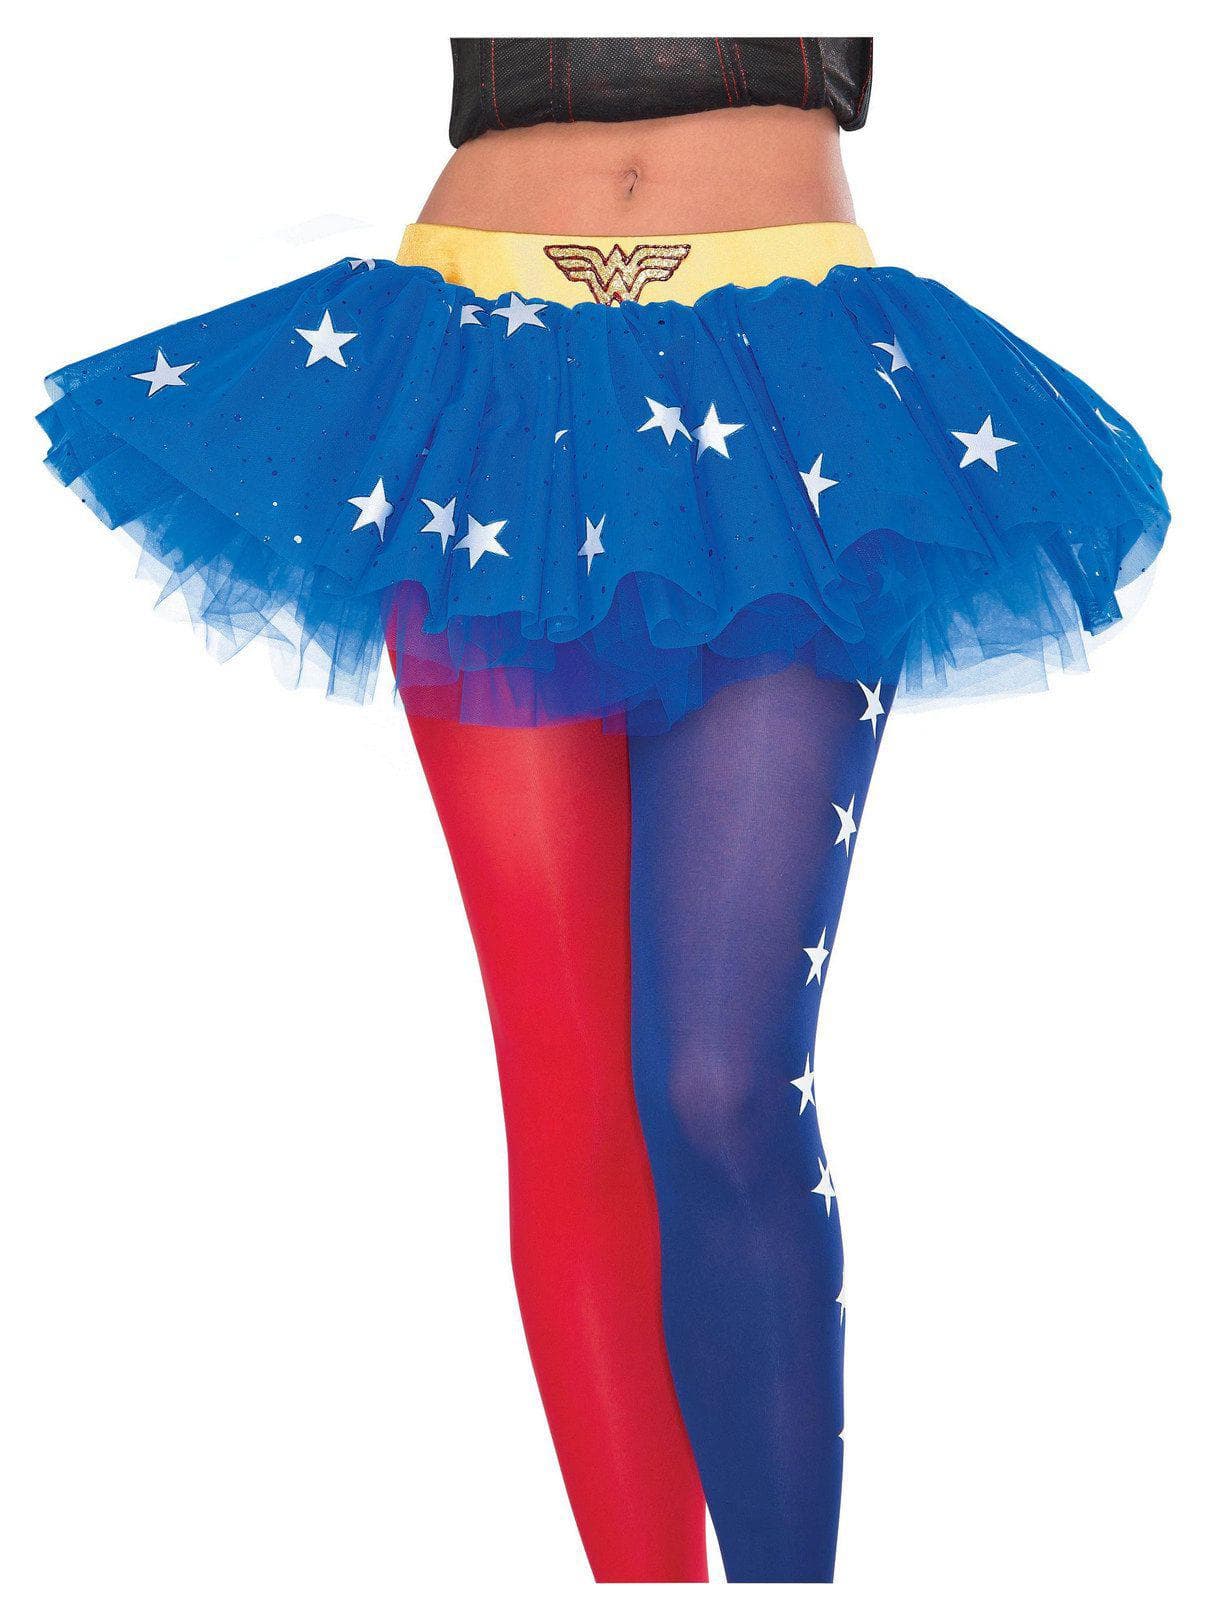 Women's Wonder Woman Tutu - costumes.com